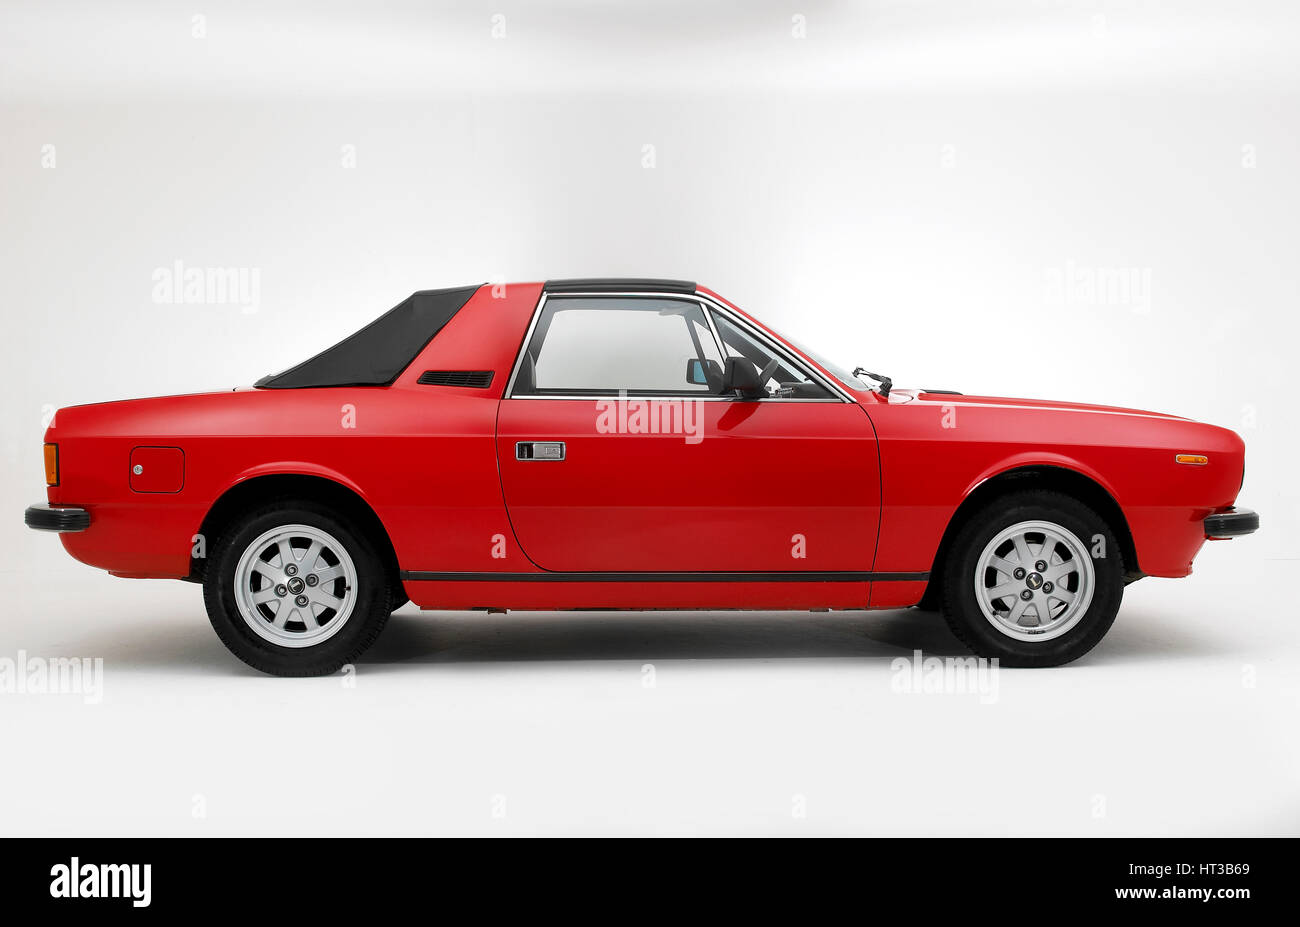 1980 Lancia Beta 2000. Artiste : Inconnu. Banque D'Images